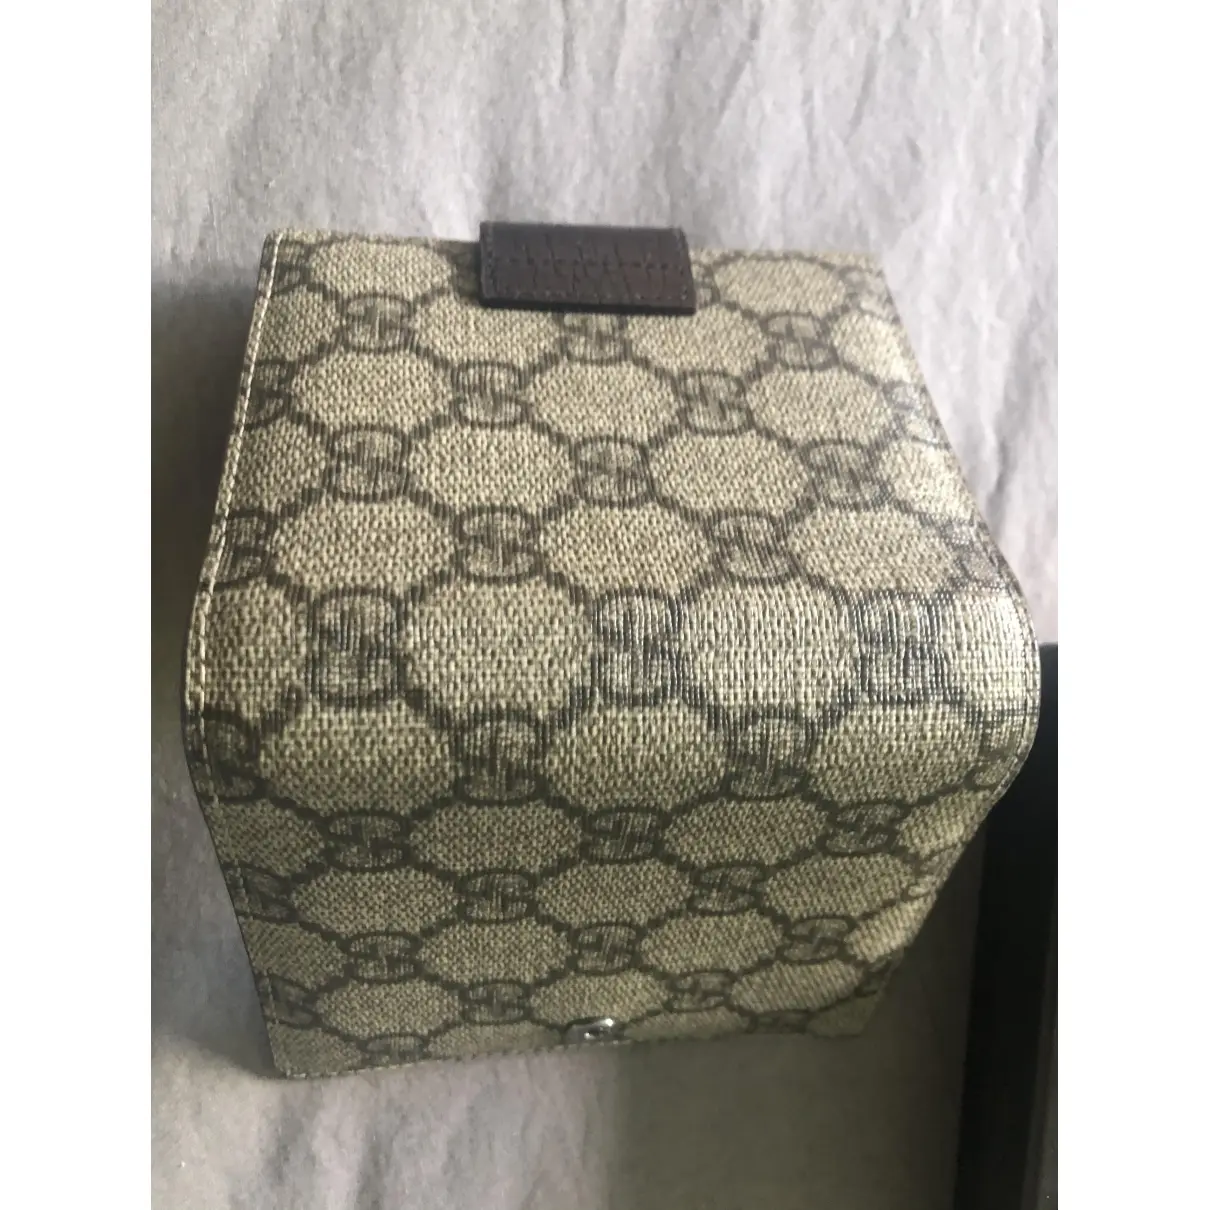 Buy Gucci Cloth purse online